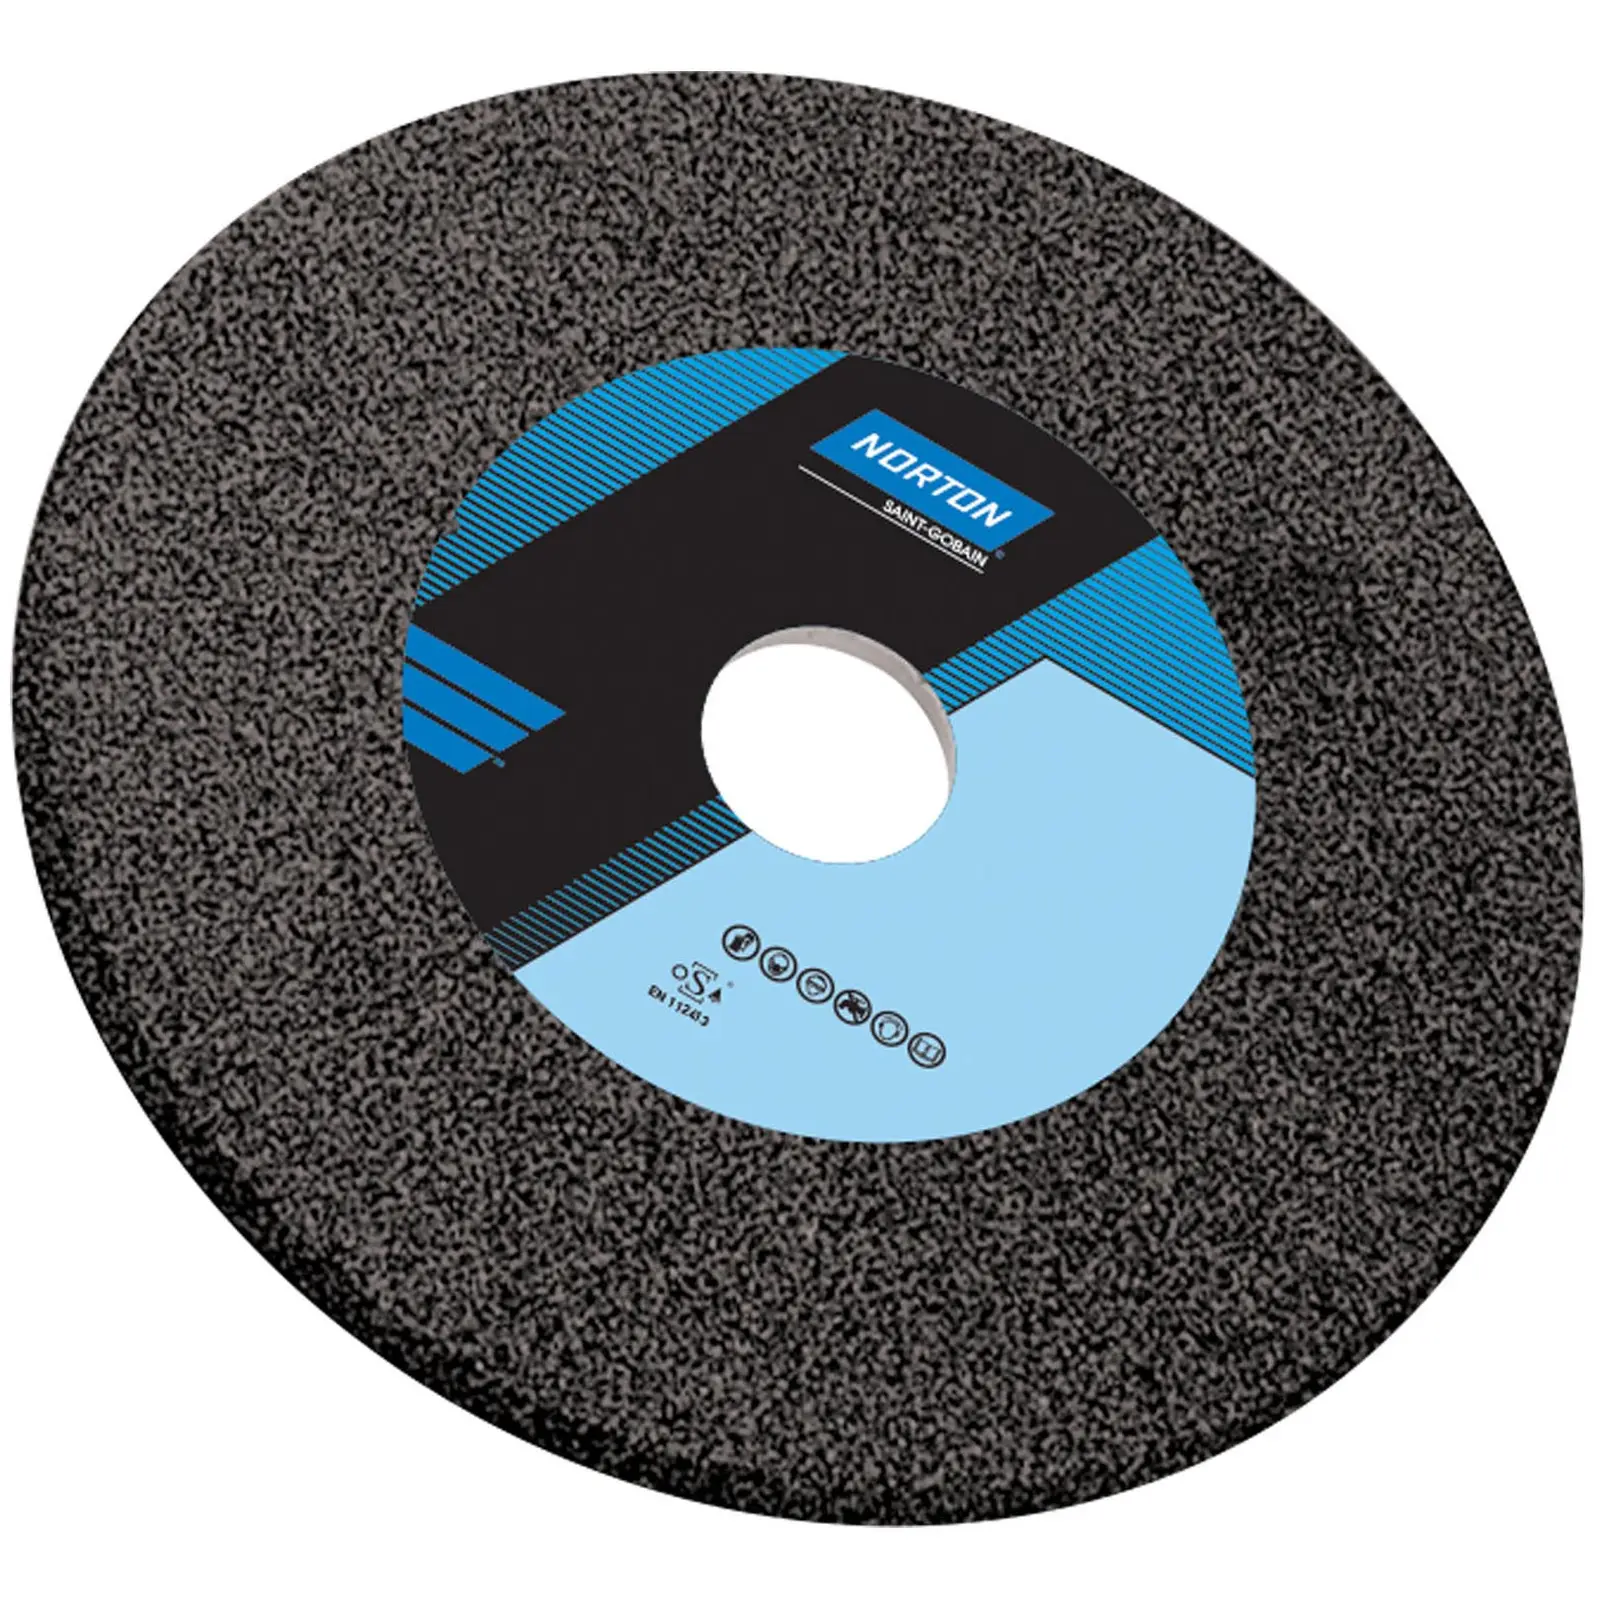 Grinding Wheel - Ø 200 mm - 46 grit - hardness grade K - silicon carbide (black) - 5 pieces